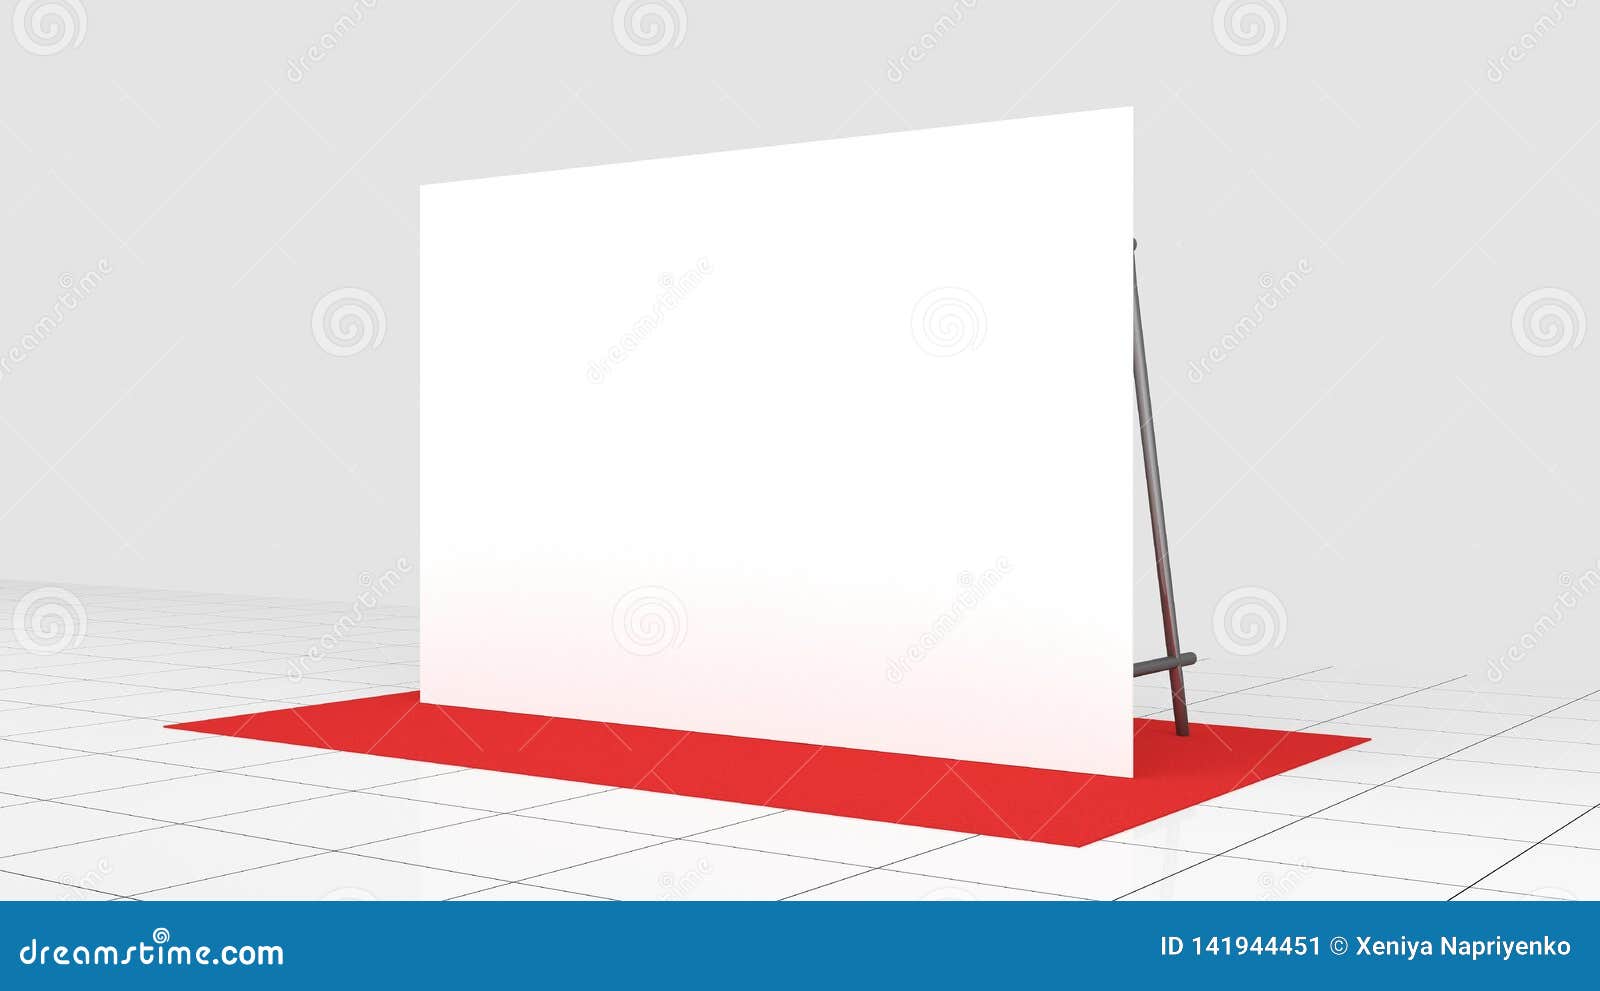 Download Backdrop, Press Banner 2x3 Meters With Red Carpit. 3d Render Template. Mockup Stock Image ...